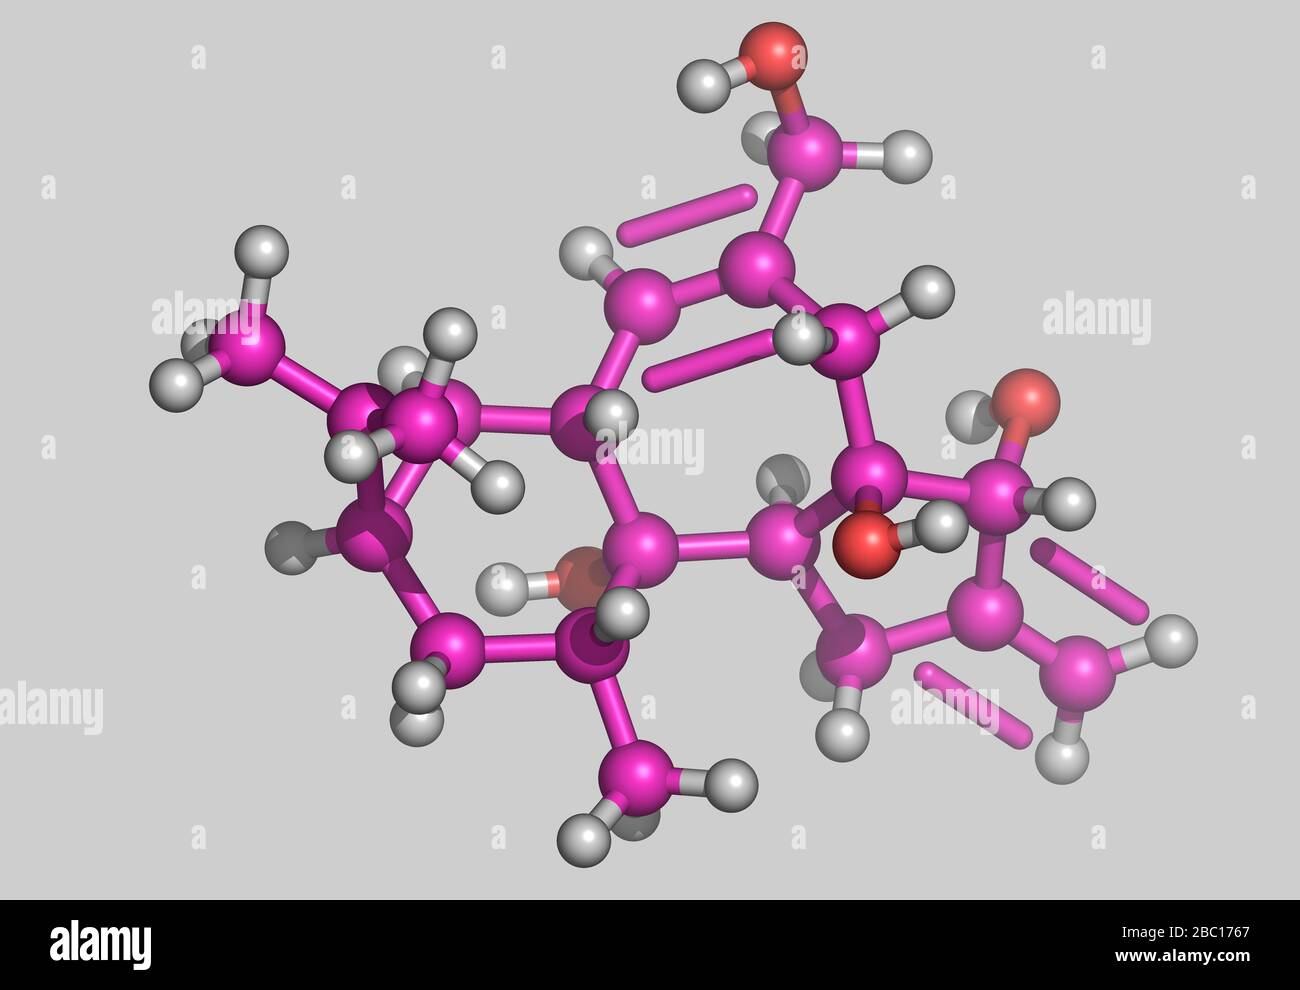 Phorbol molecular model with atoms Stock Photo